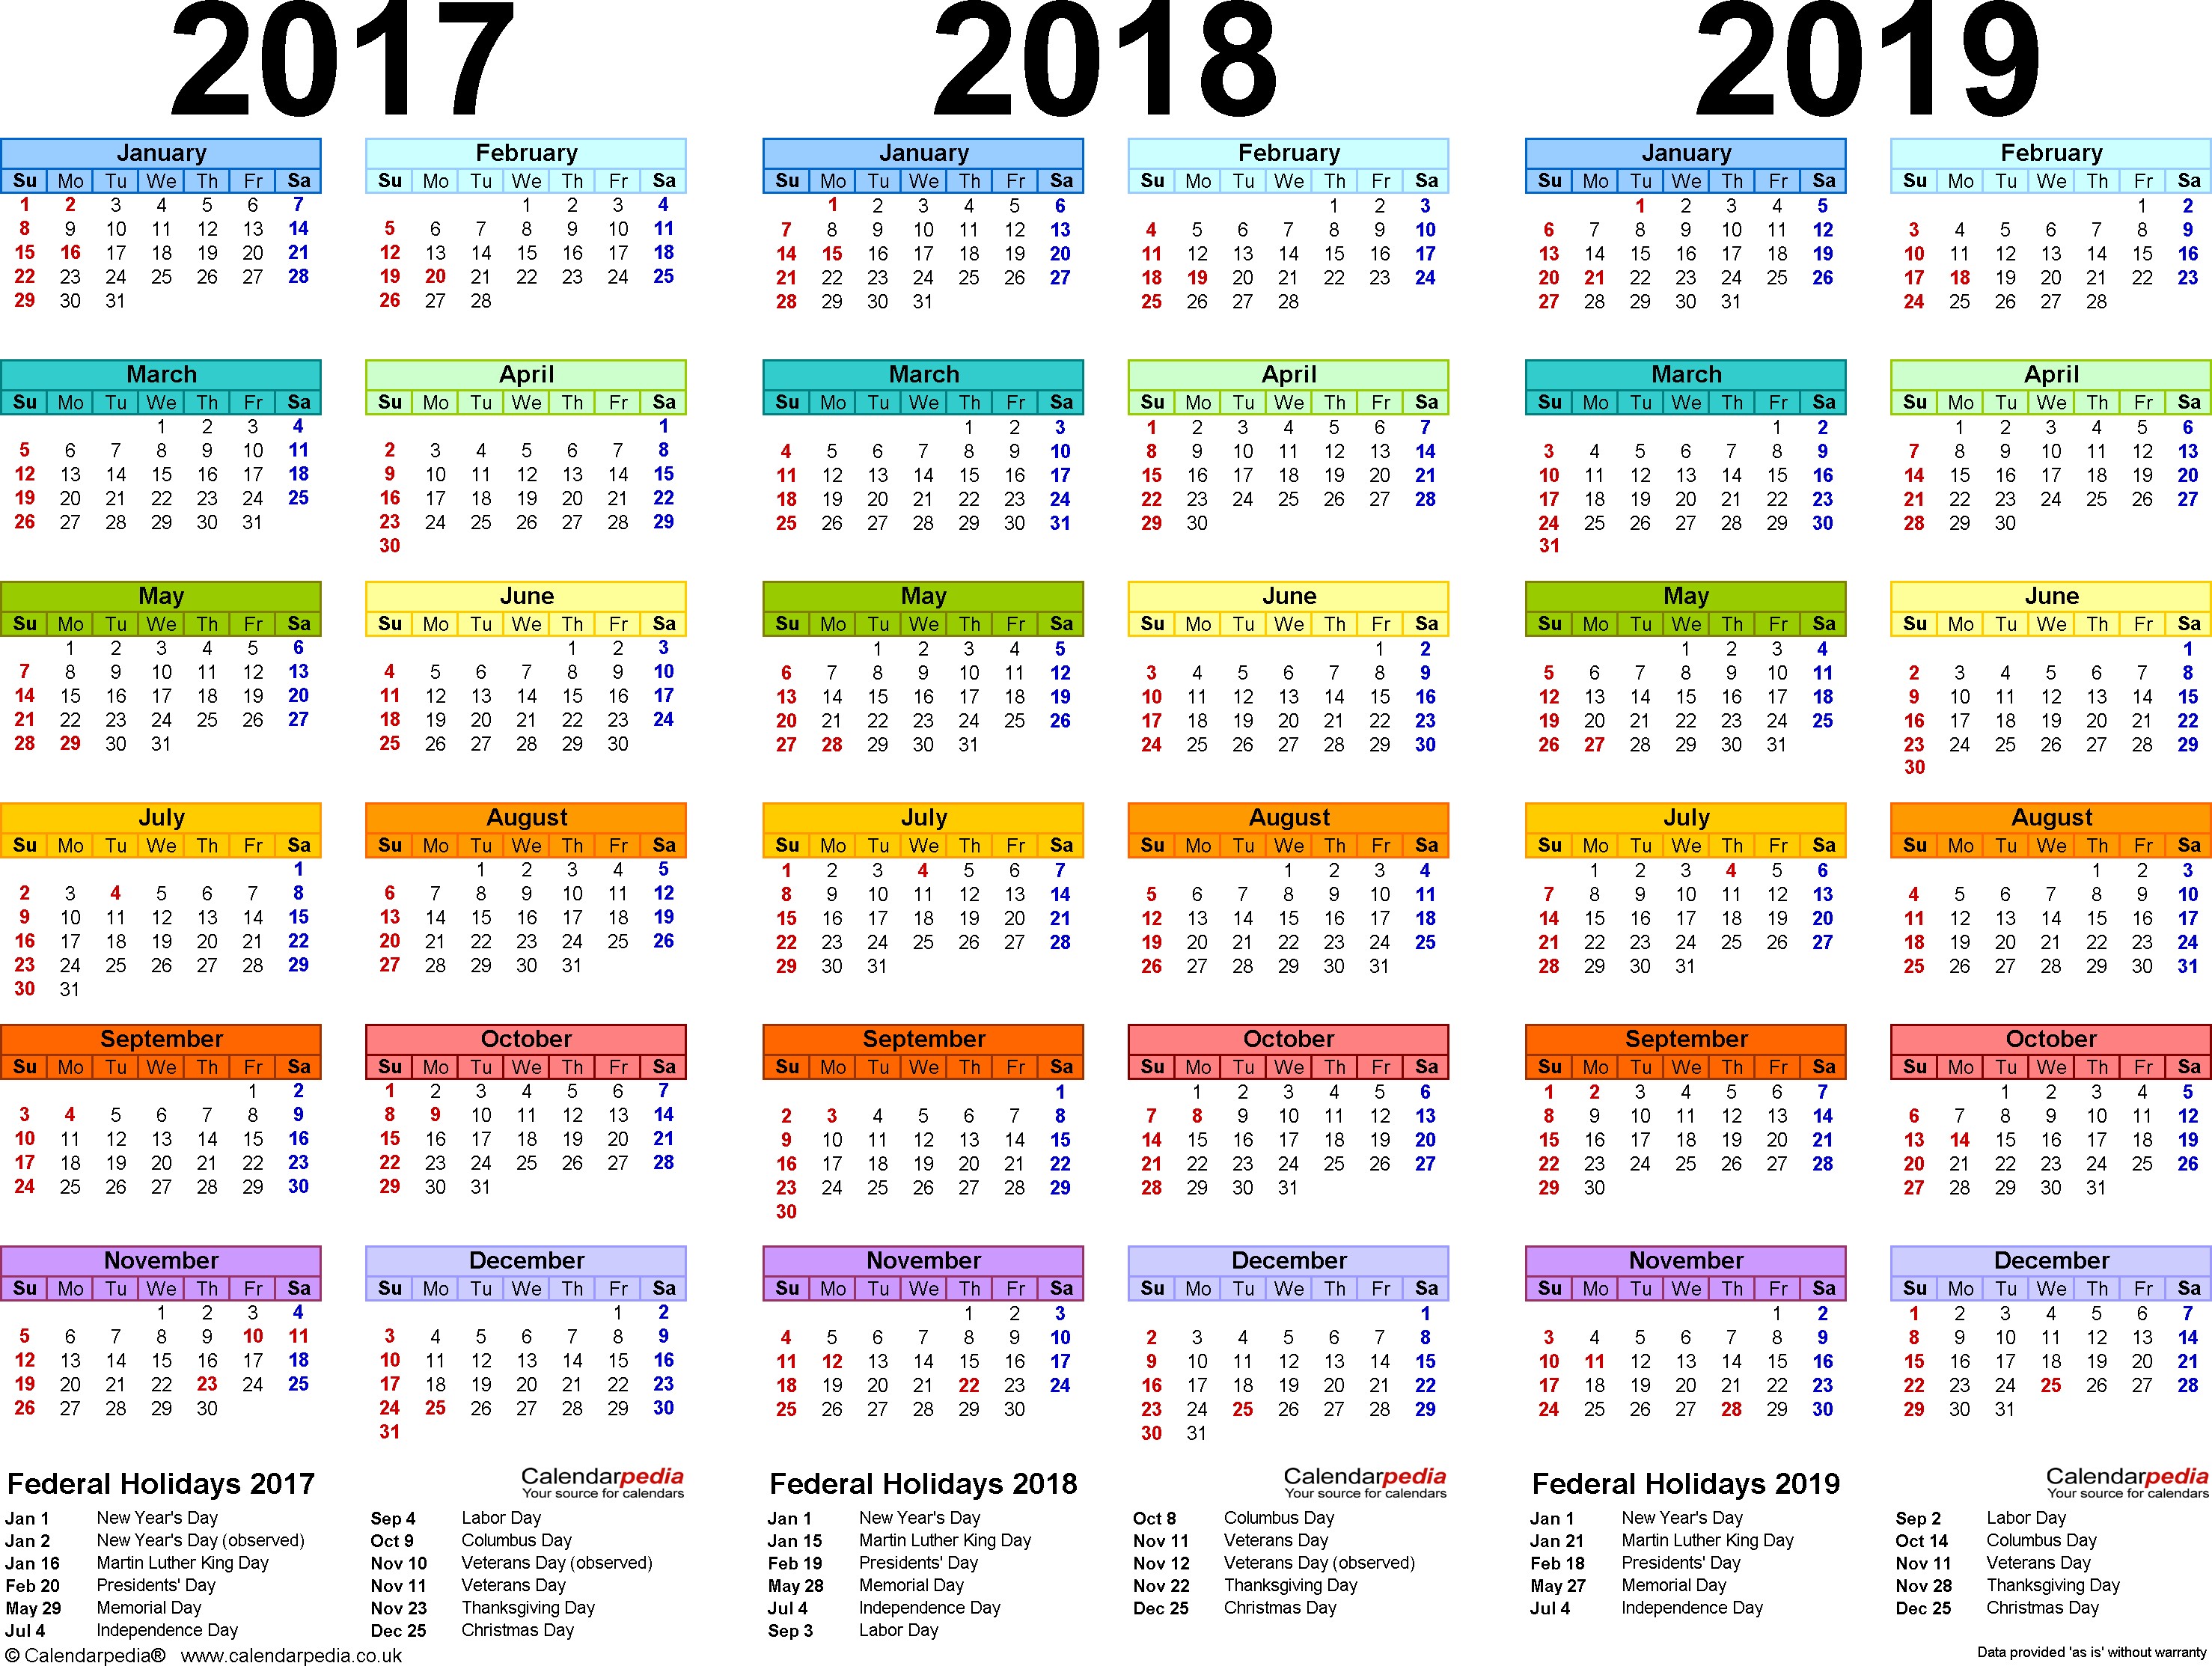 lovely-printable-canadian-calendar-free-printable-calendar-monthly